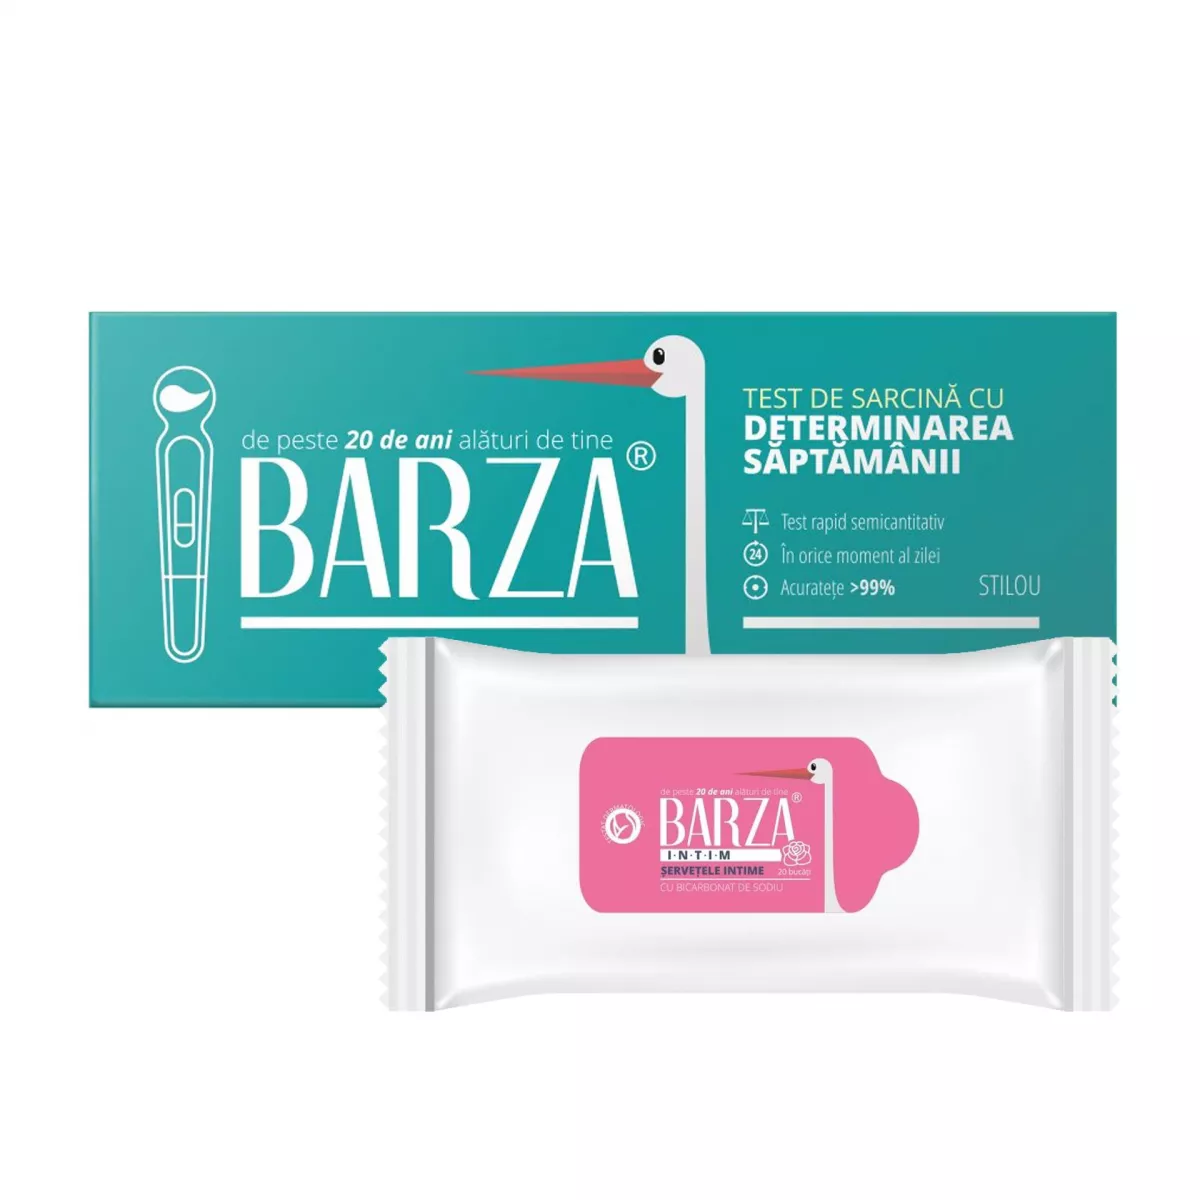 Test sarcina Barza cu det saptamanii stilou + Servetele intime Barza, [],remediumfarm.ro